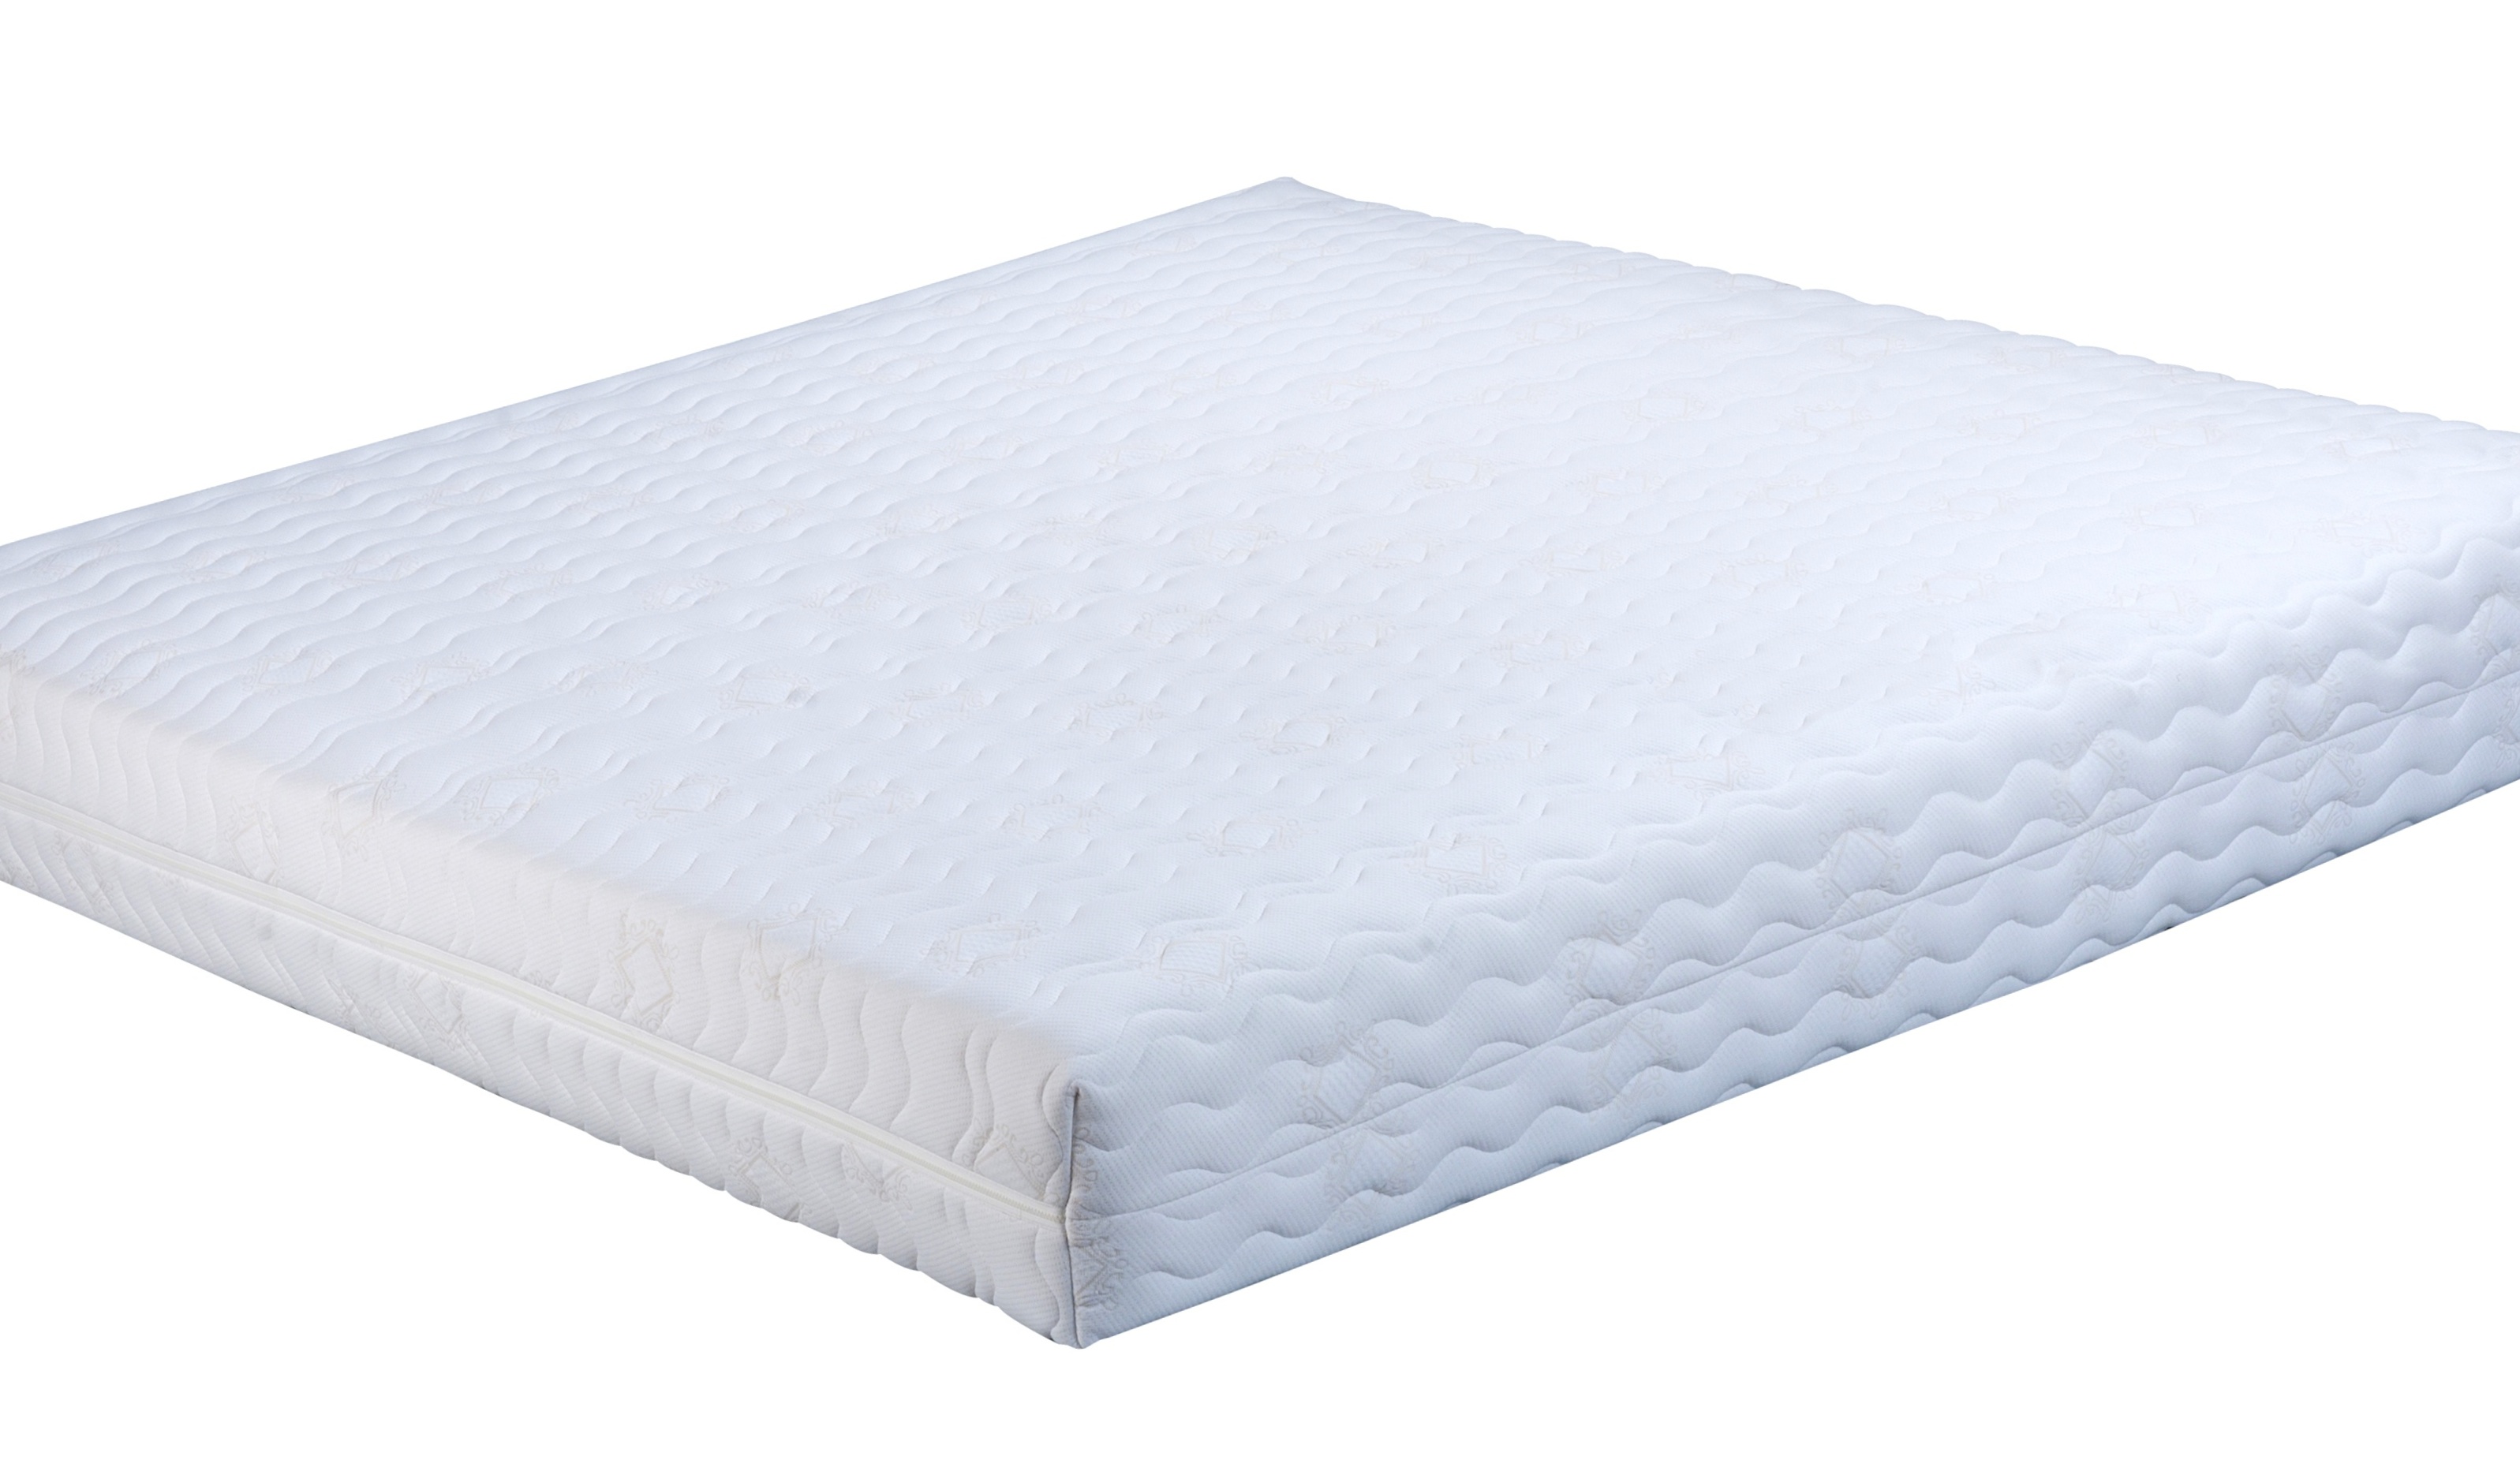 foam rubber mattress covers